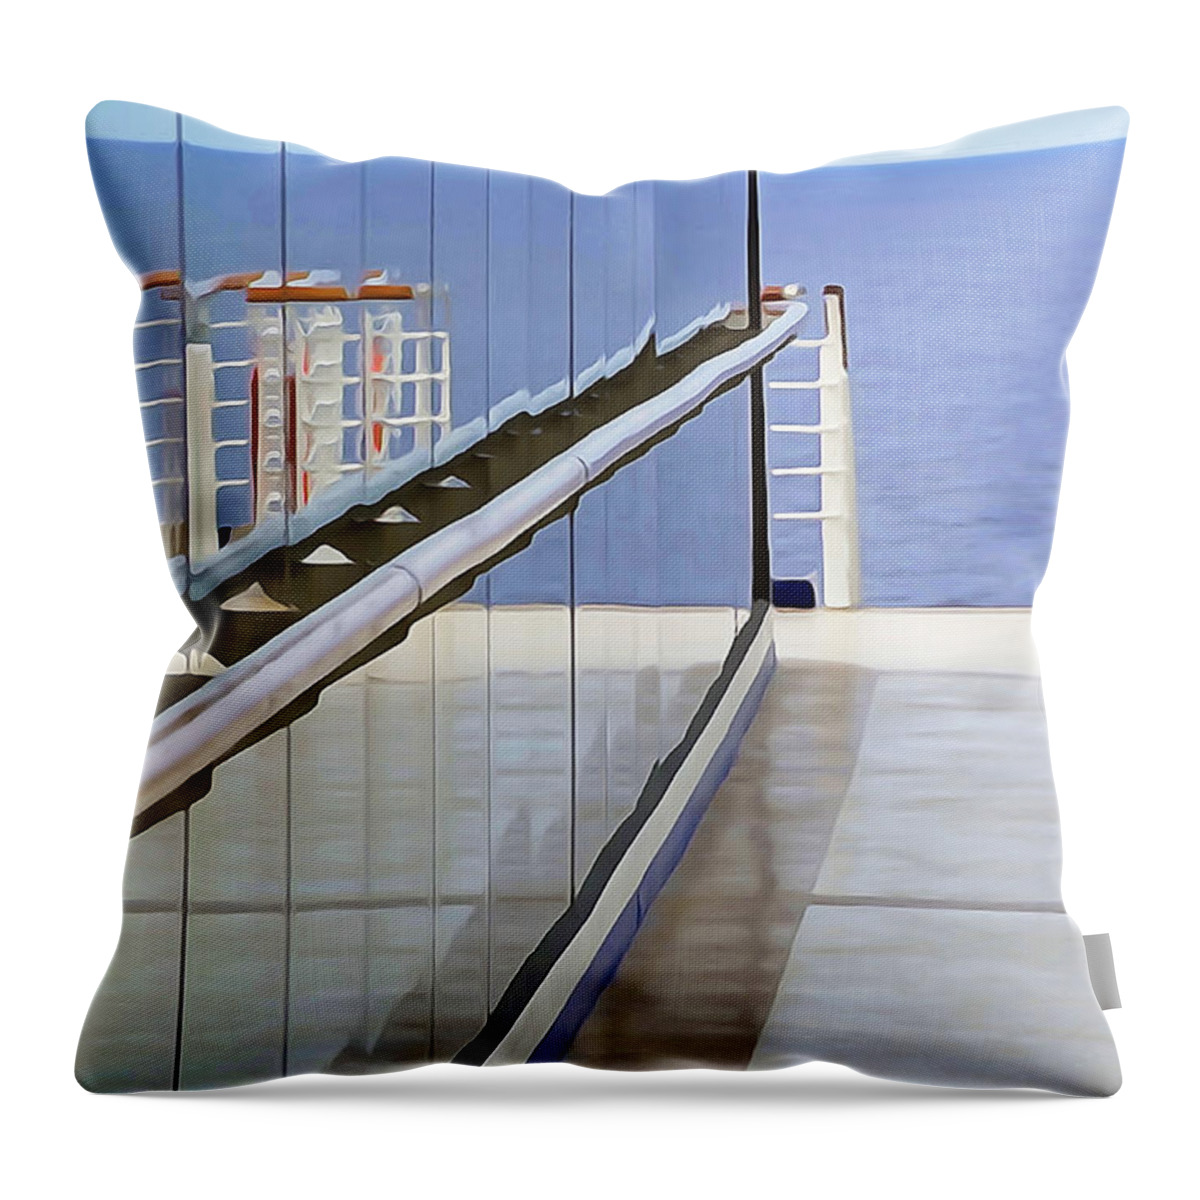 Cruise Ship Throw Pillow featuring the photograph Cruise Ship Vista by Dennis Cox